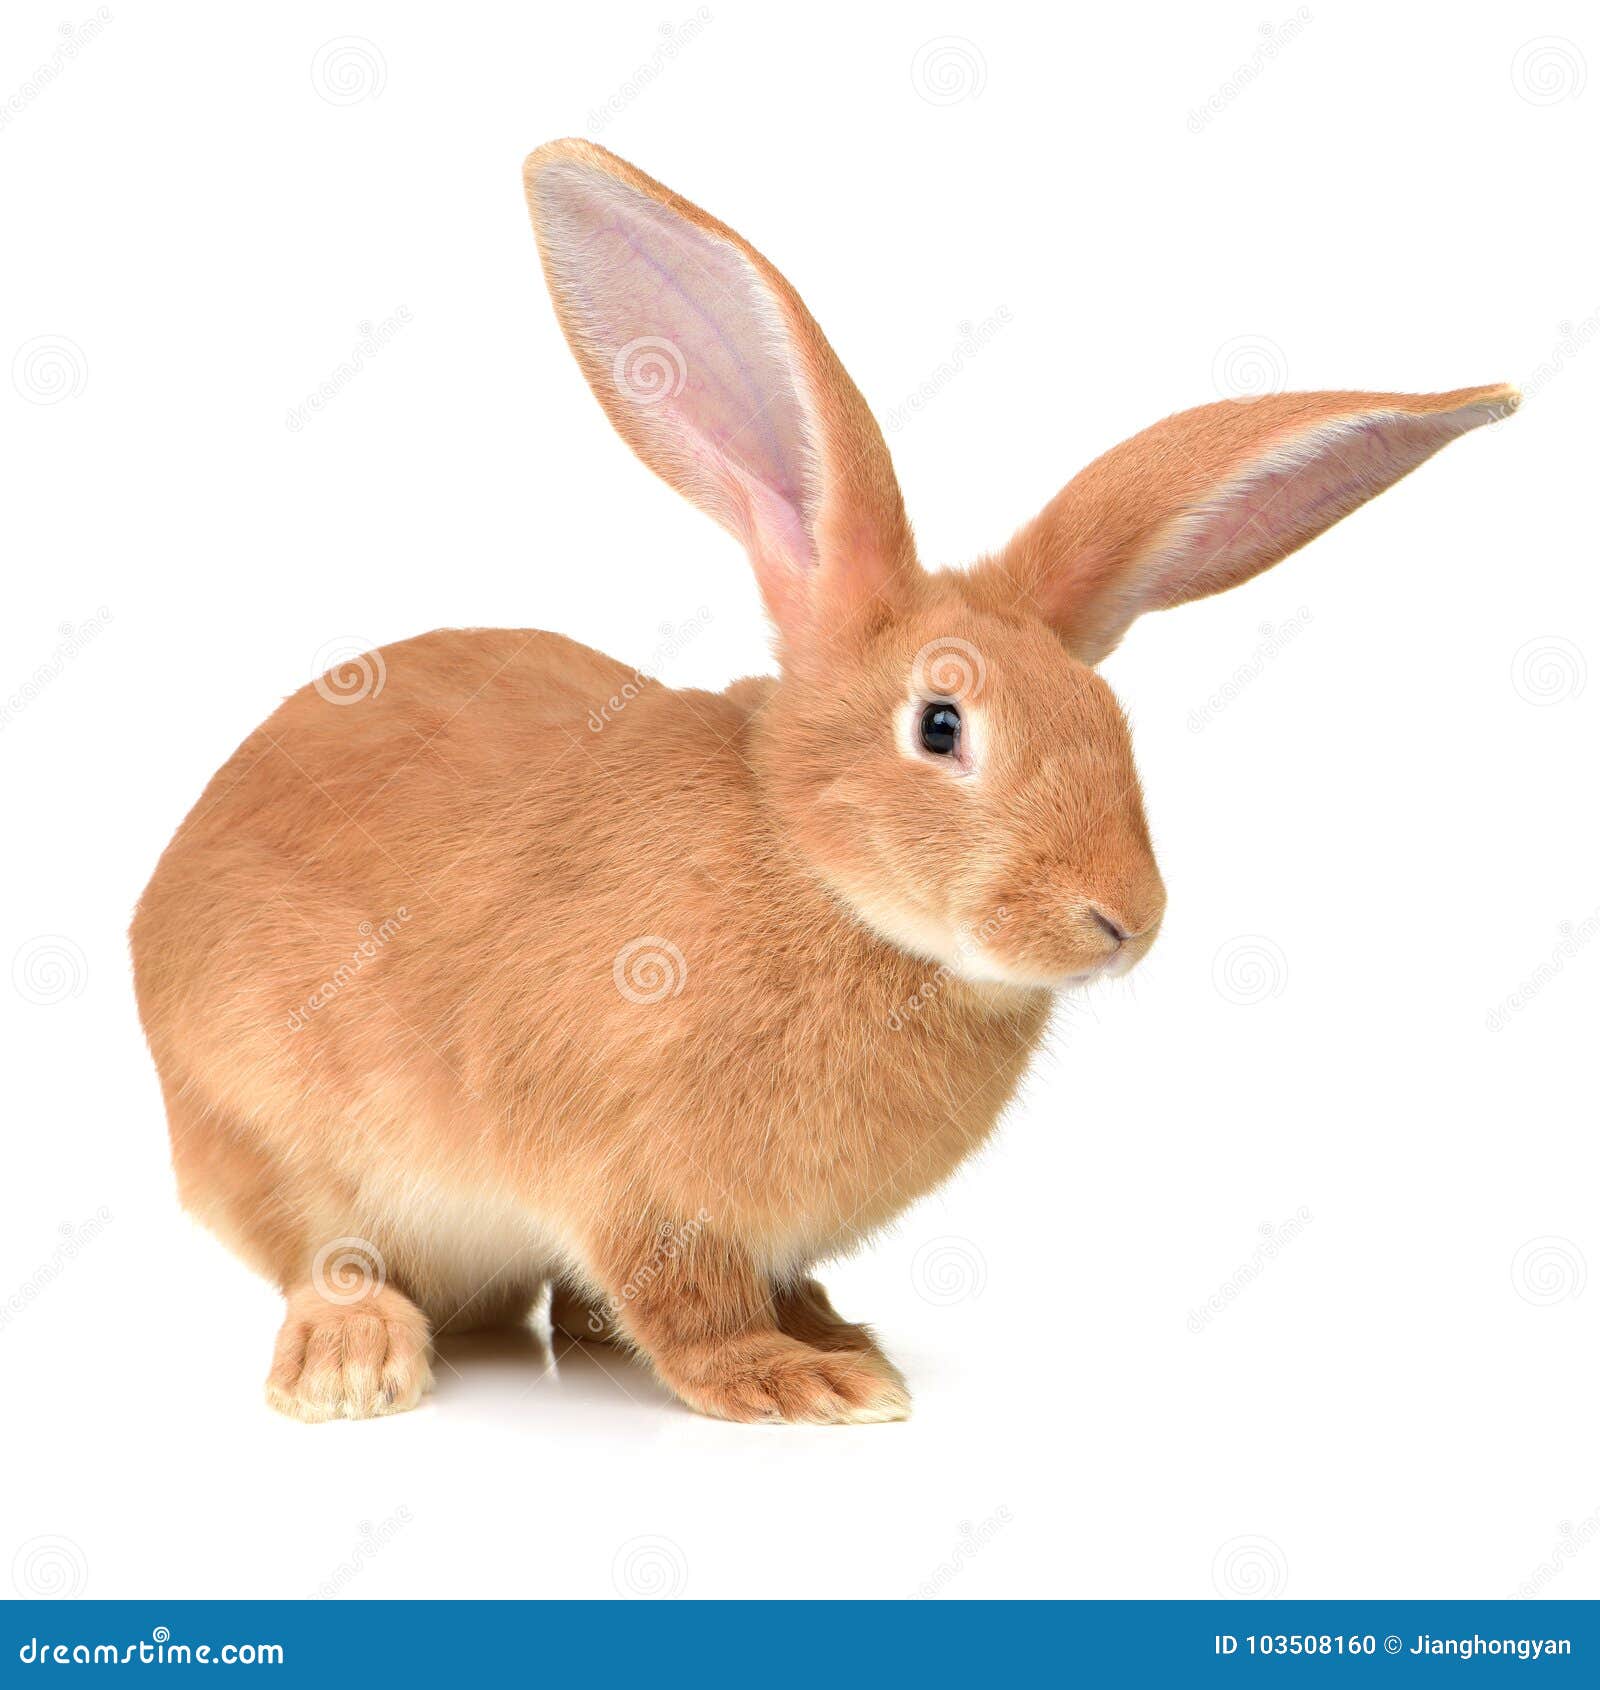 Rabbit farm animal stock photo. Image of farm, wood - 103508160